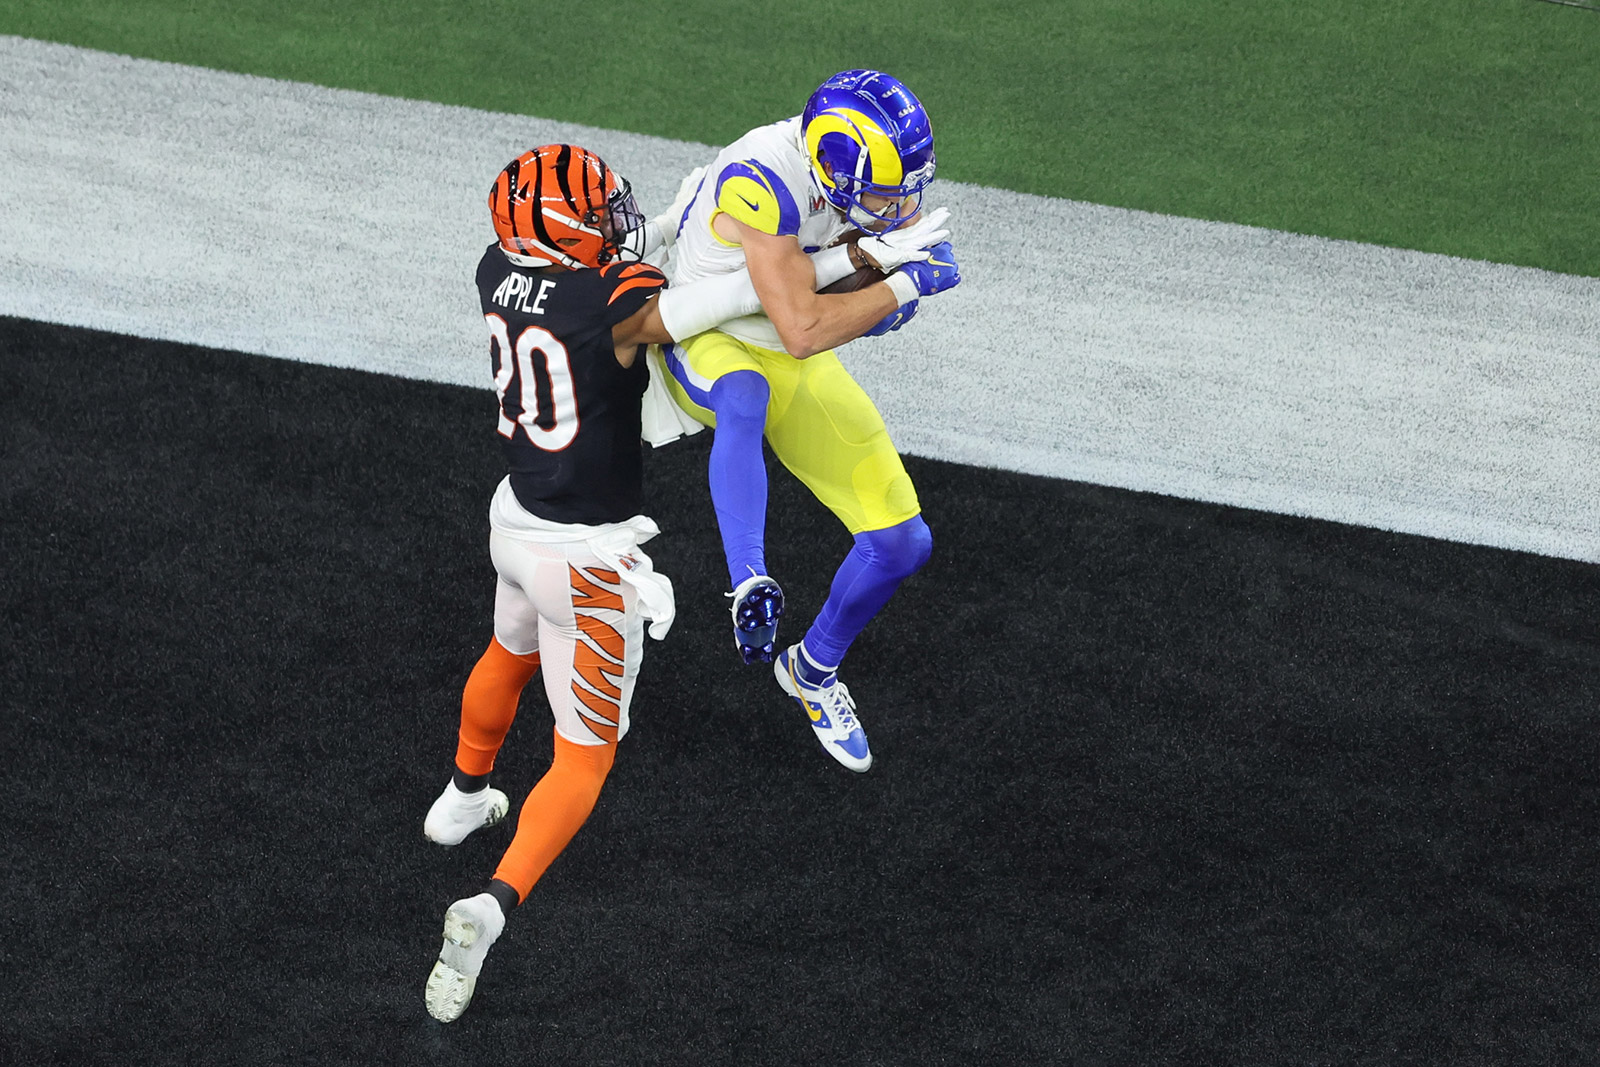 Rams release game trailer for Super Bowl LVI rematch vs. Bengals